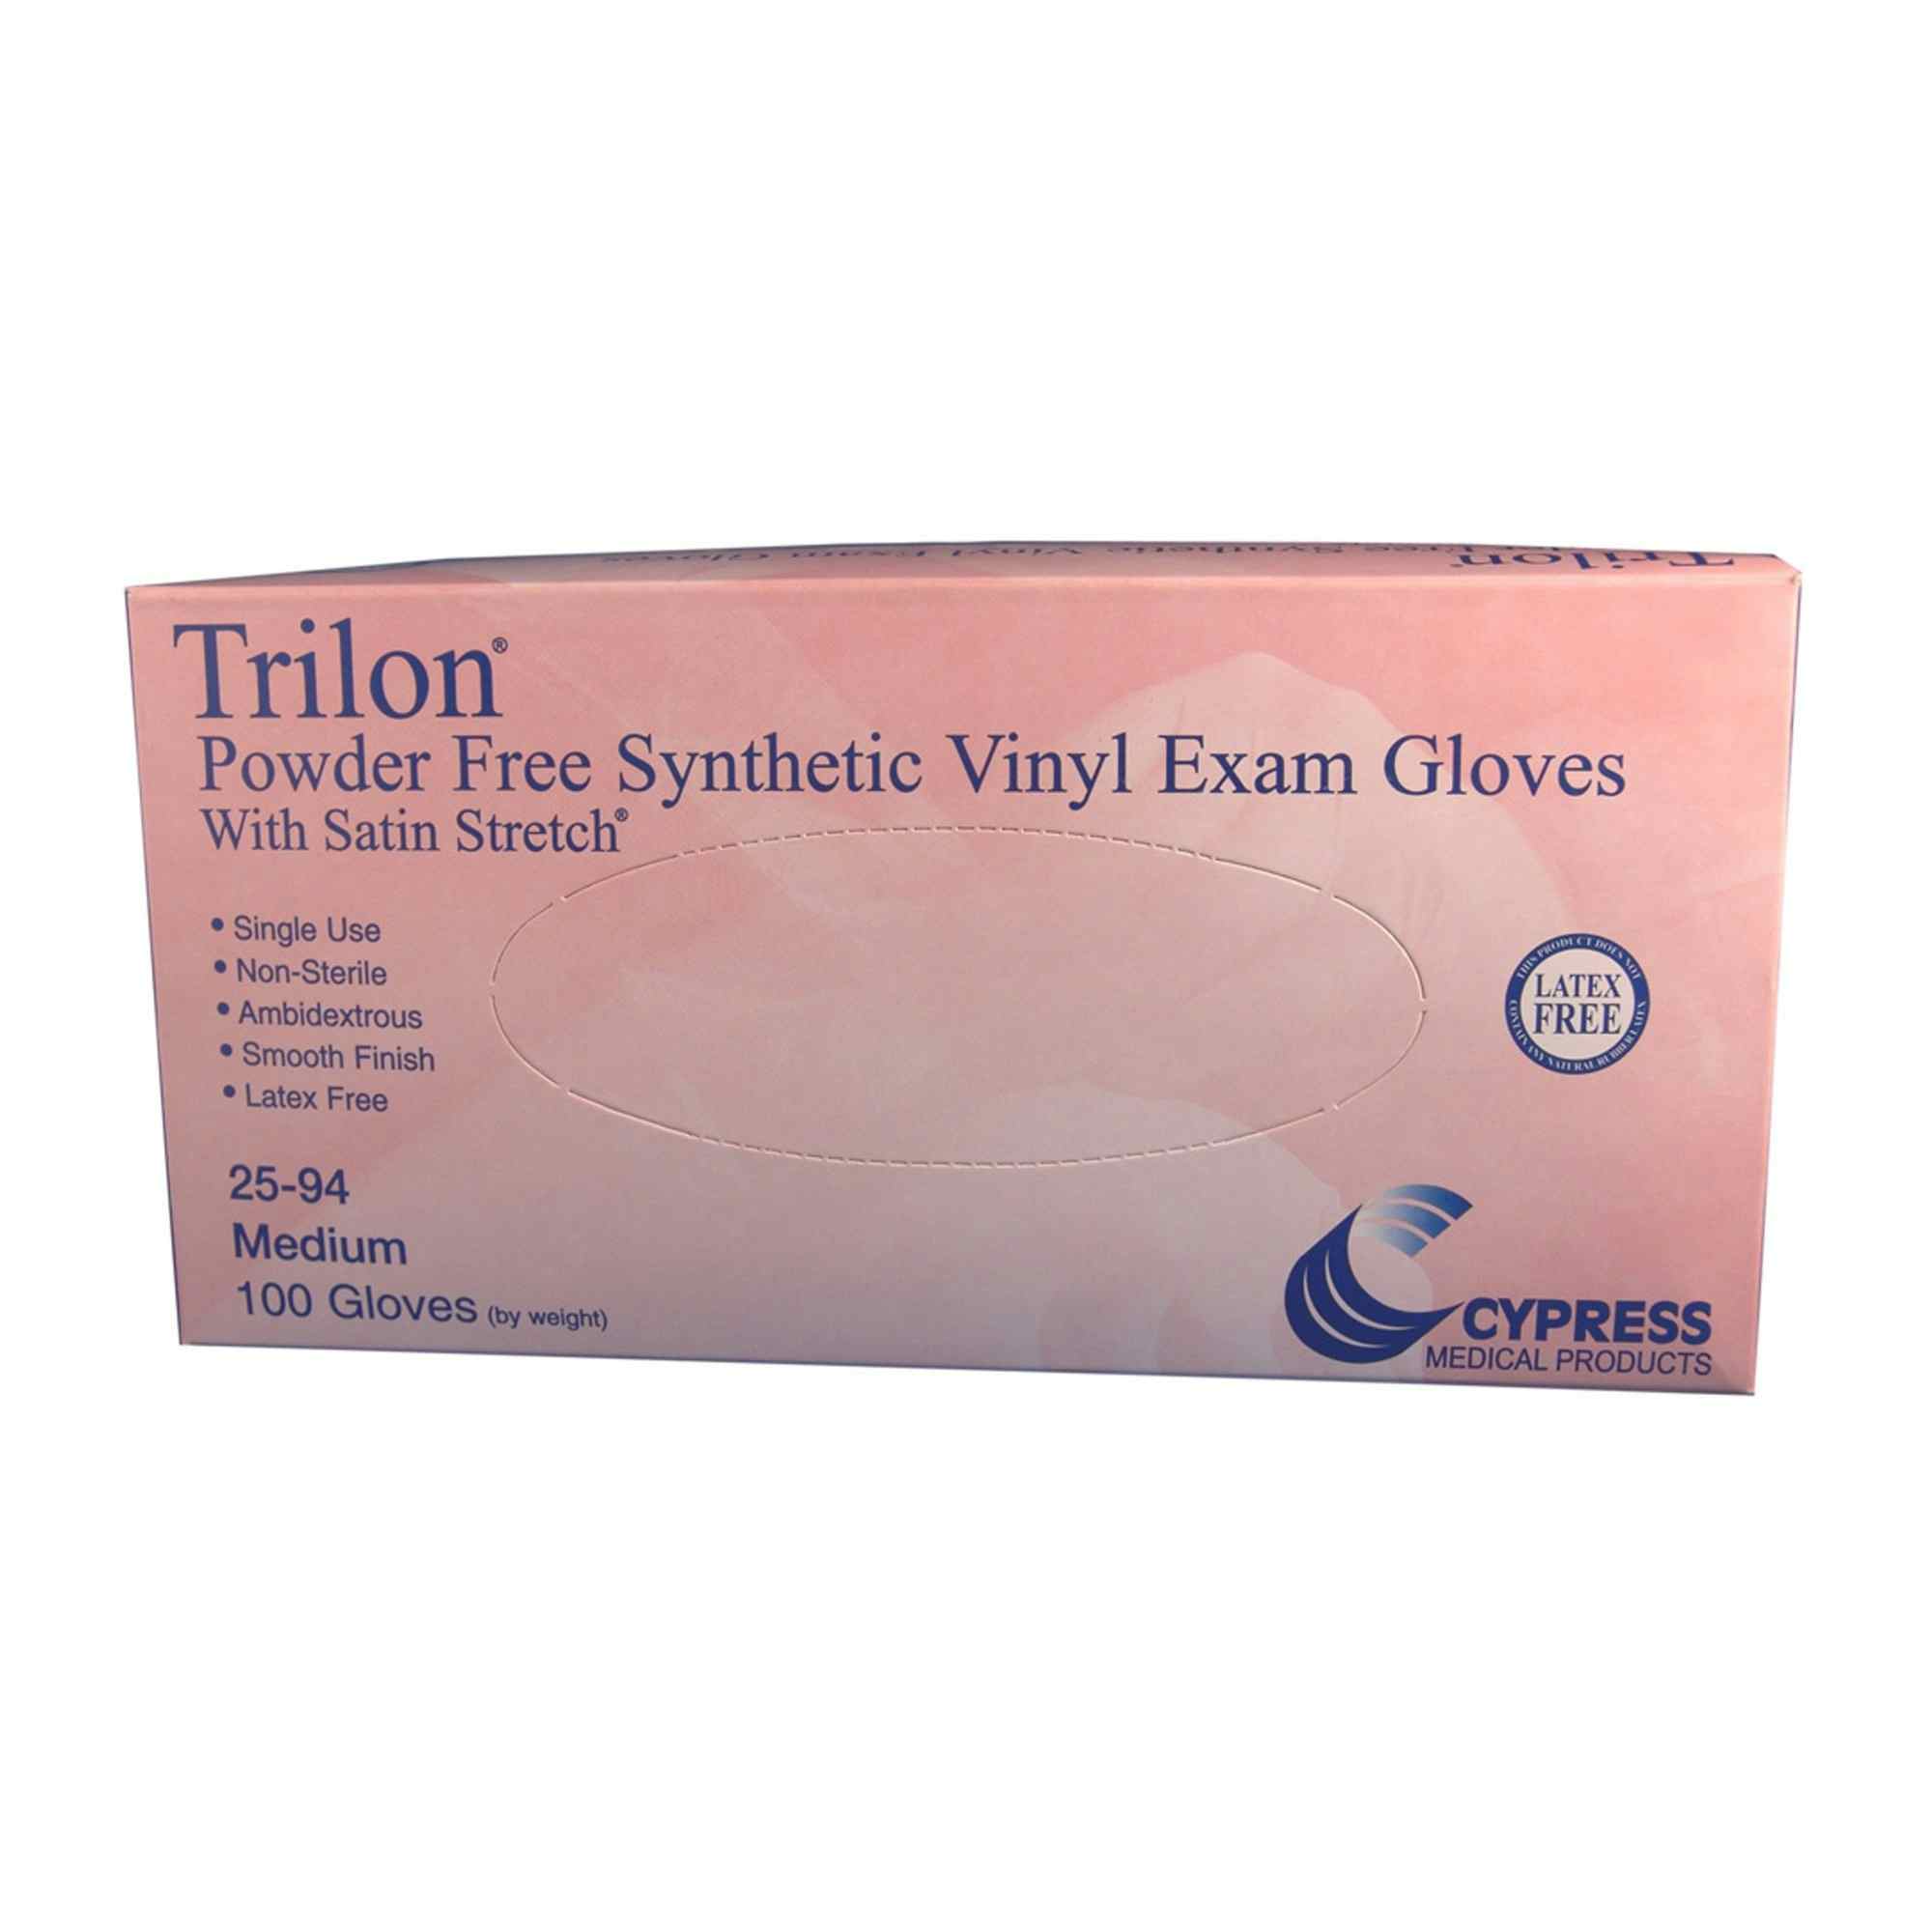 Trilon Powder Free Synthetic Vinyl Exam Glove, Clear, 25-94, Medium - Box of 100